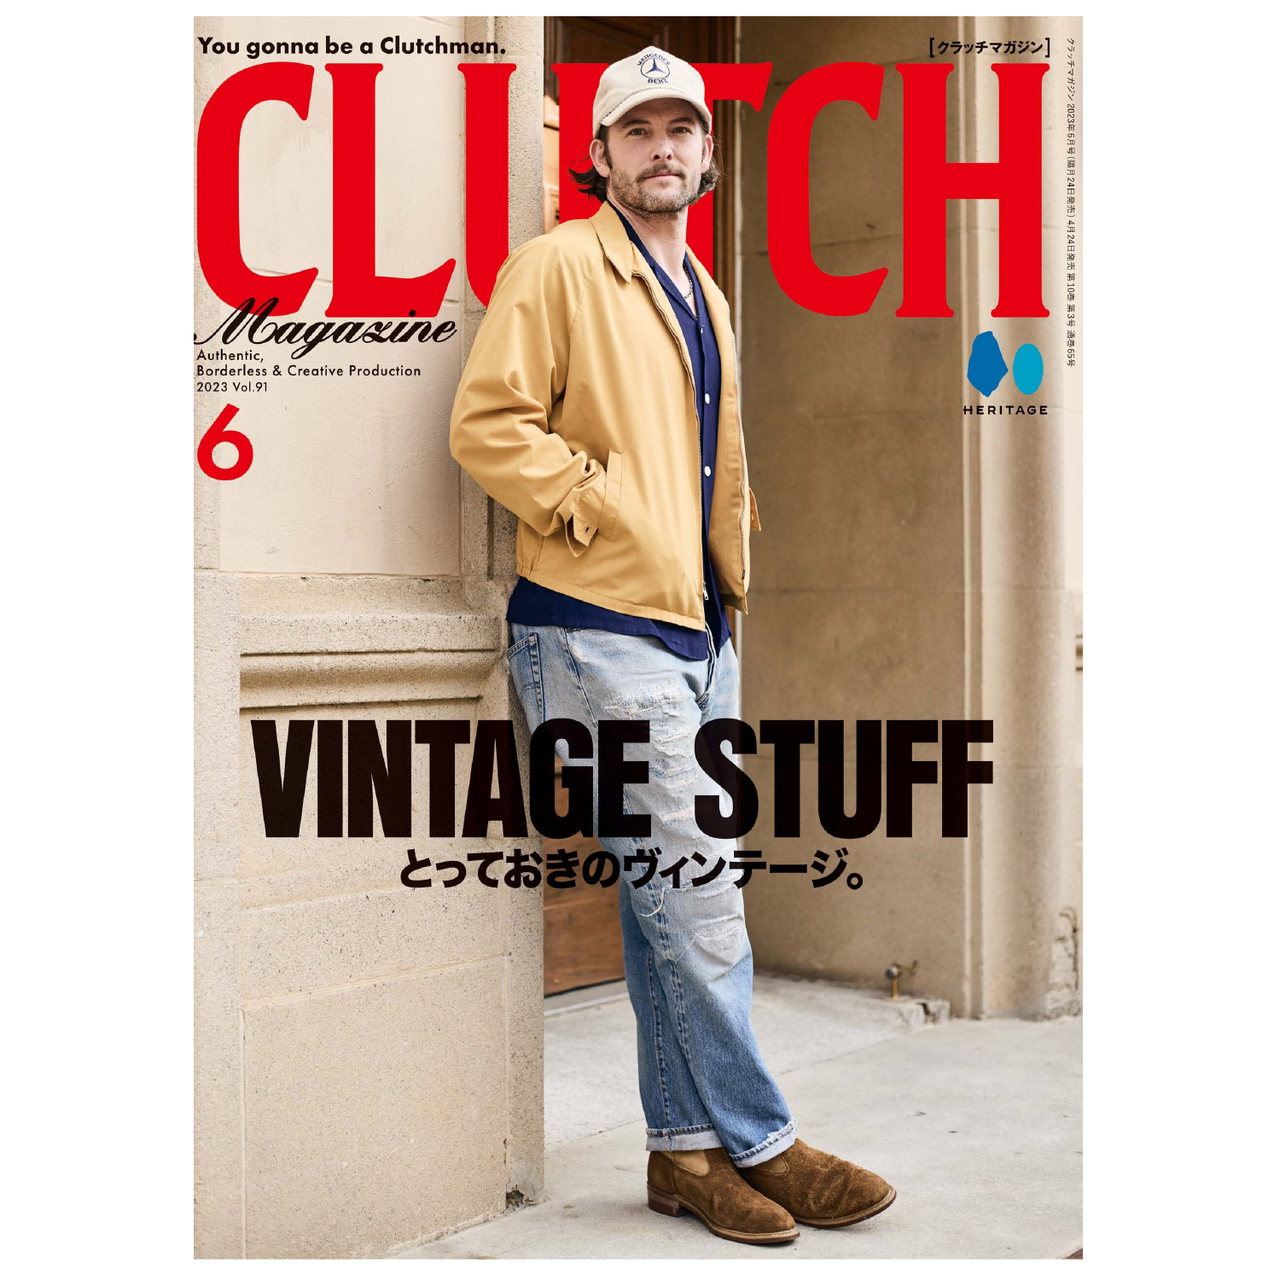 Clutch Magazine Vol. 91 "Vintage Stuff"-Magazine-Clutch Cafe